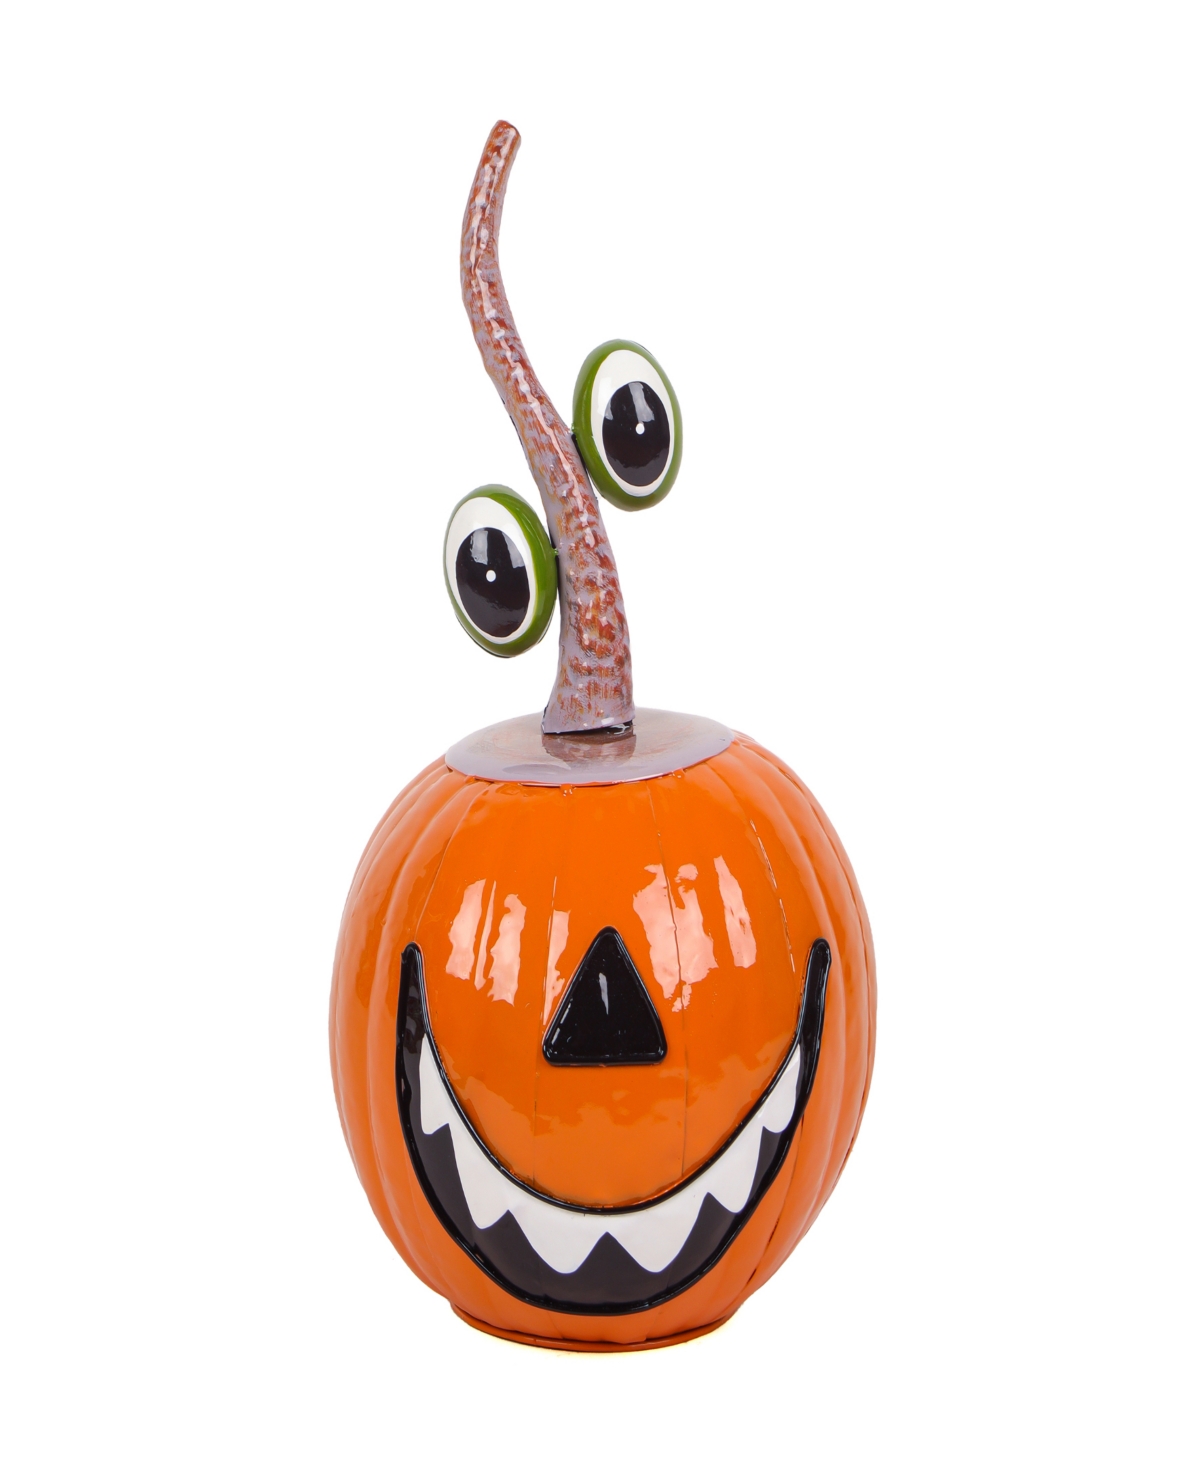 15" Halloween Decoration, Floating Eyes Metal Pumpkin with Gloss Finish, Orange - Orange